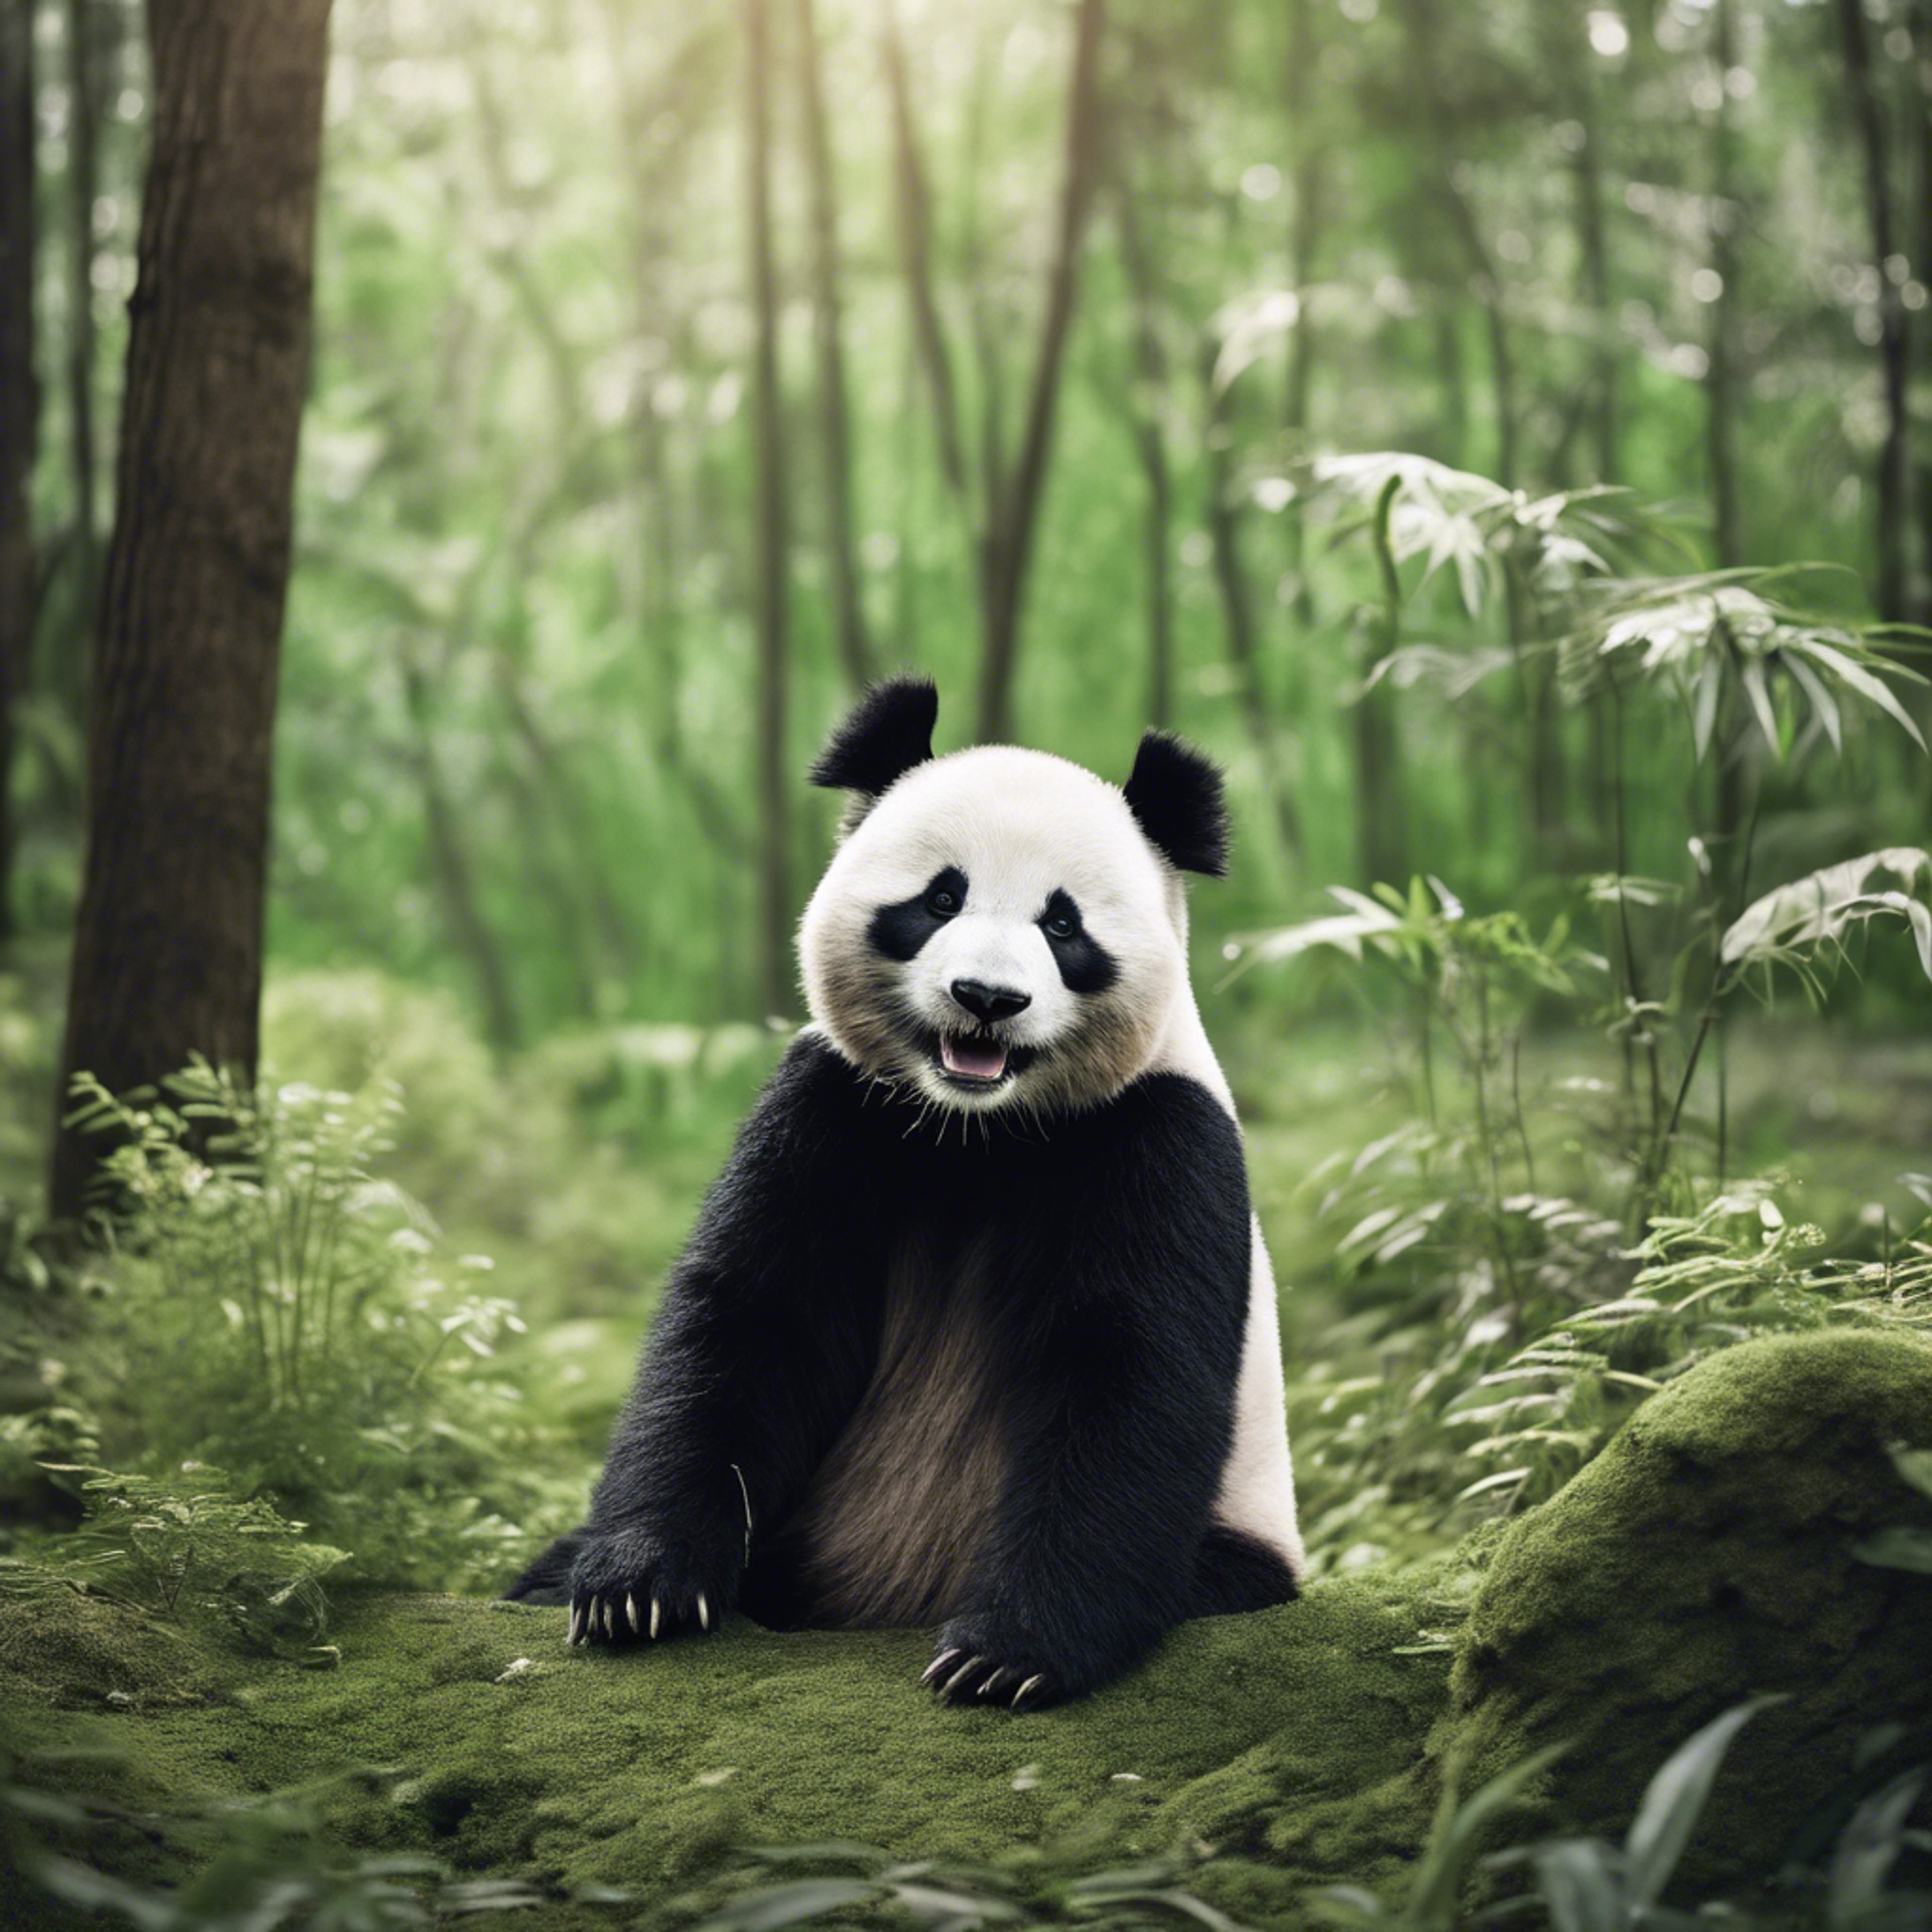 A laughing panda bear, celebrating a fun day in black, white and green wilderness. Papel de parede[a059d50594da43a98985]